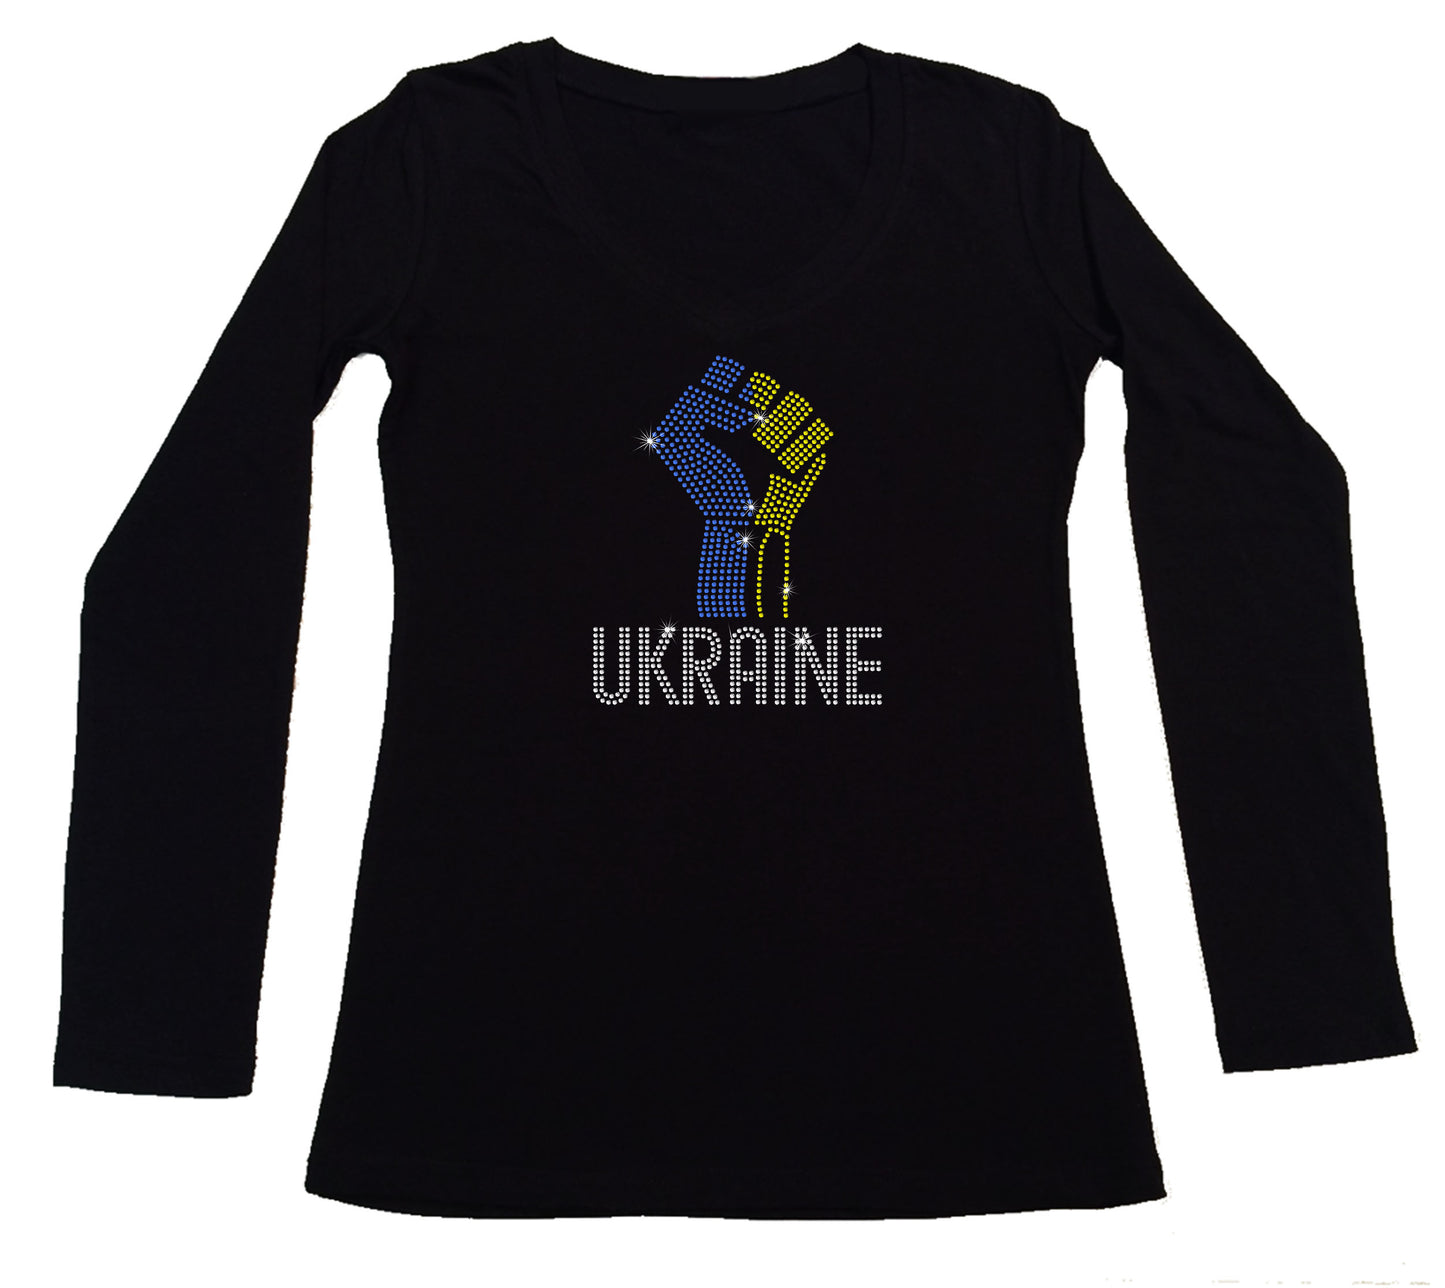 Women's Rhinestone Fitted Tight Snug Shirt Ukraine with Fist - Ukrainian Colors Support for Ukraine